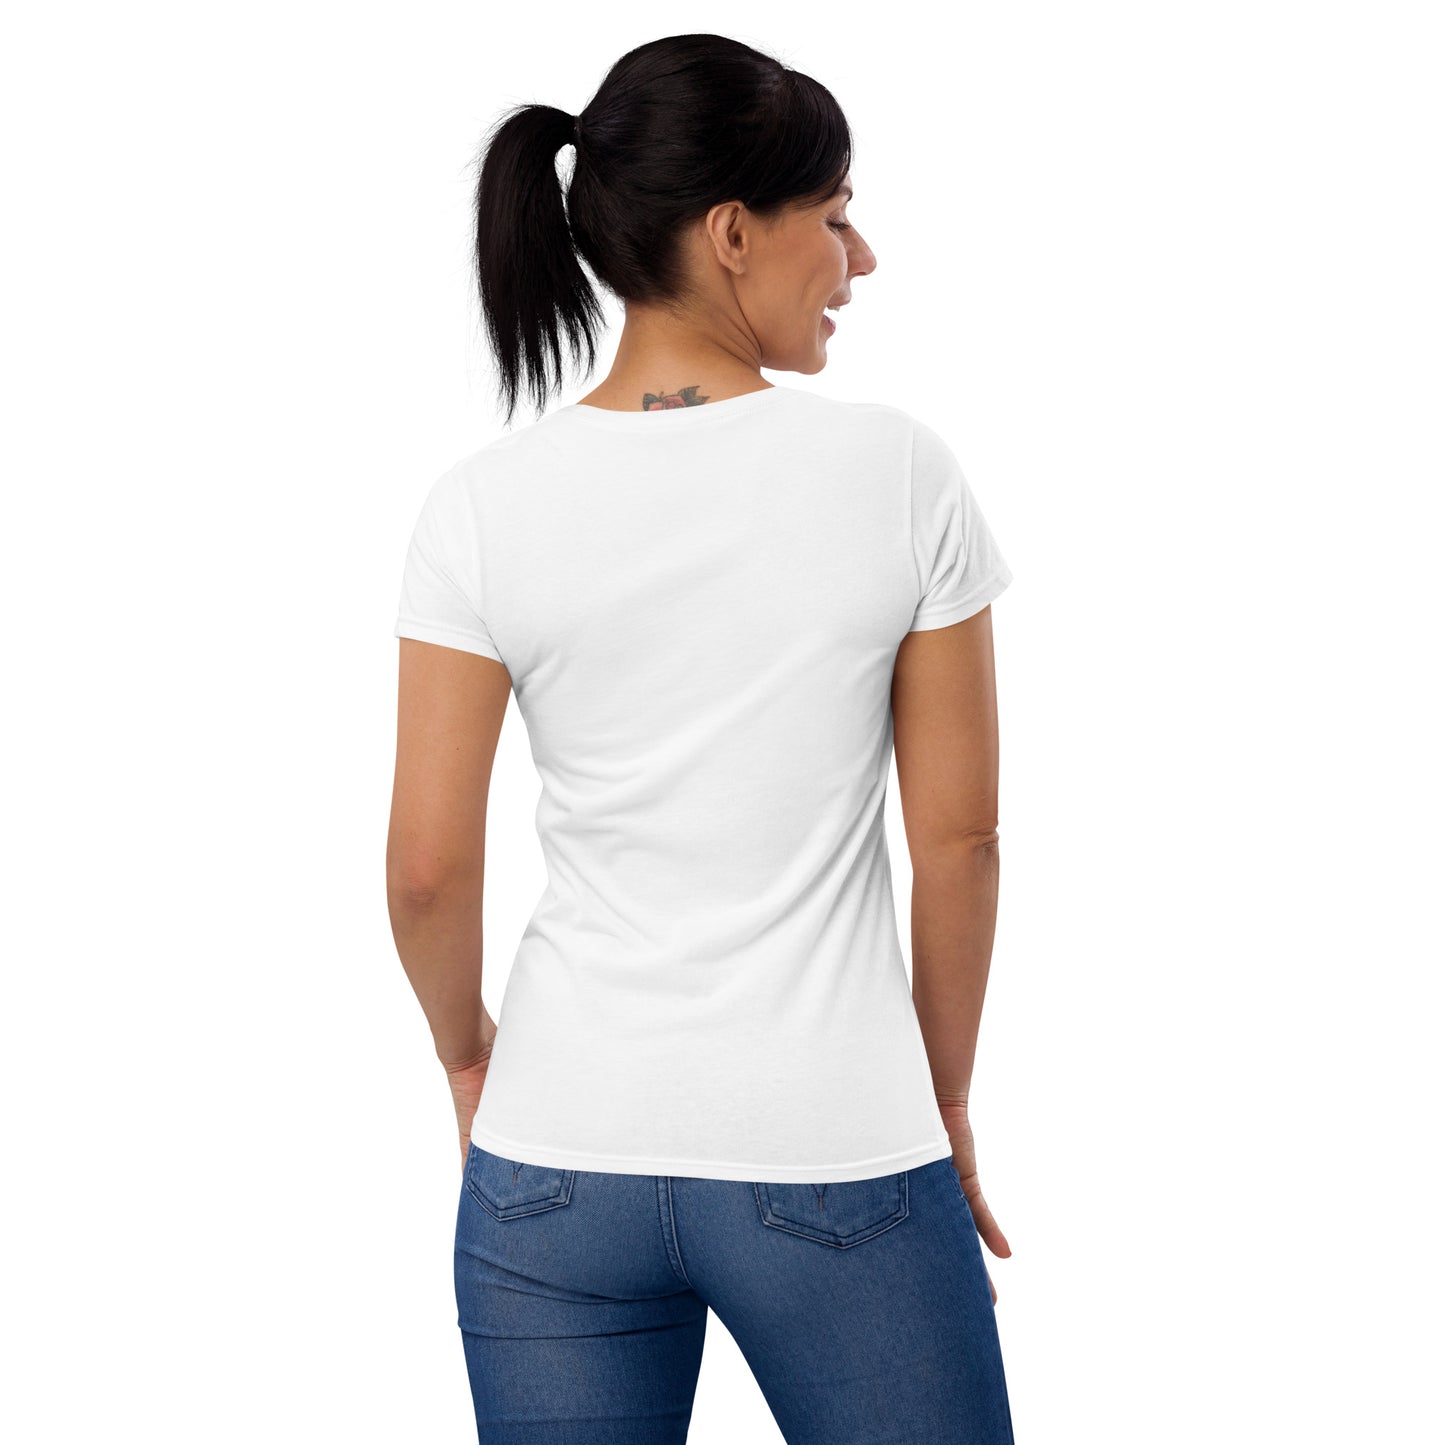 American Muscle: #shelifts Women's short sleeve t-shirt